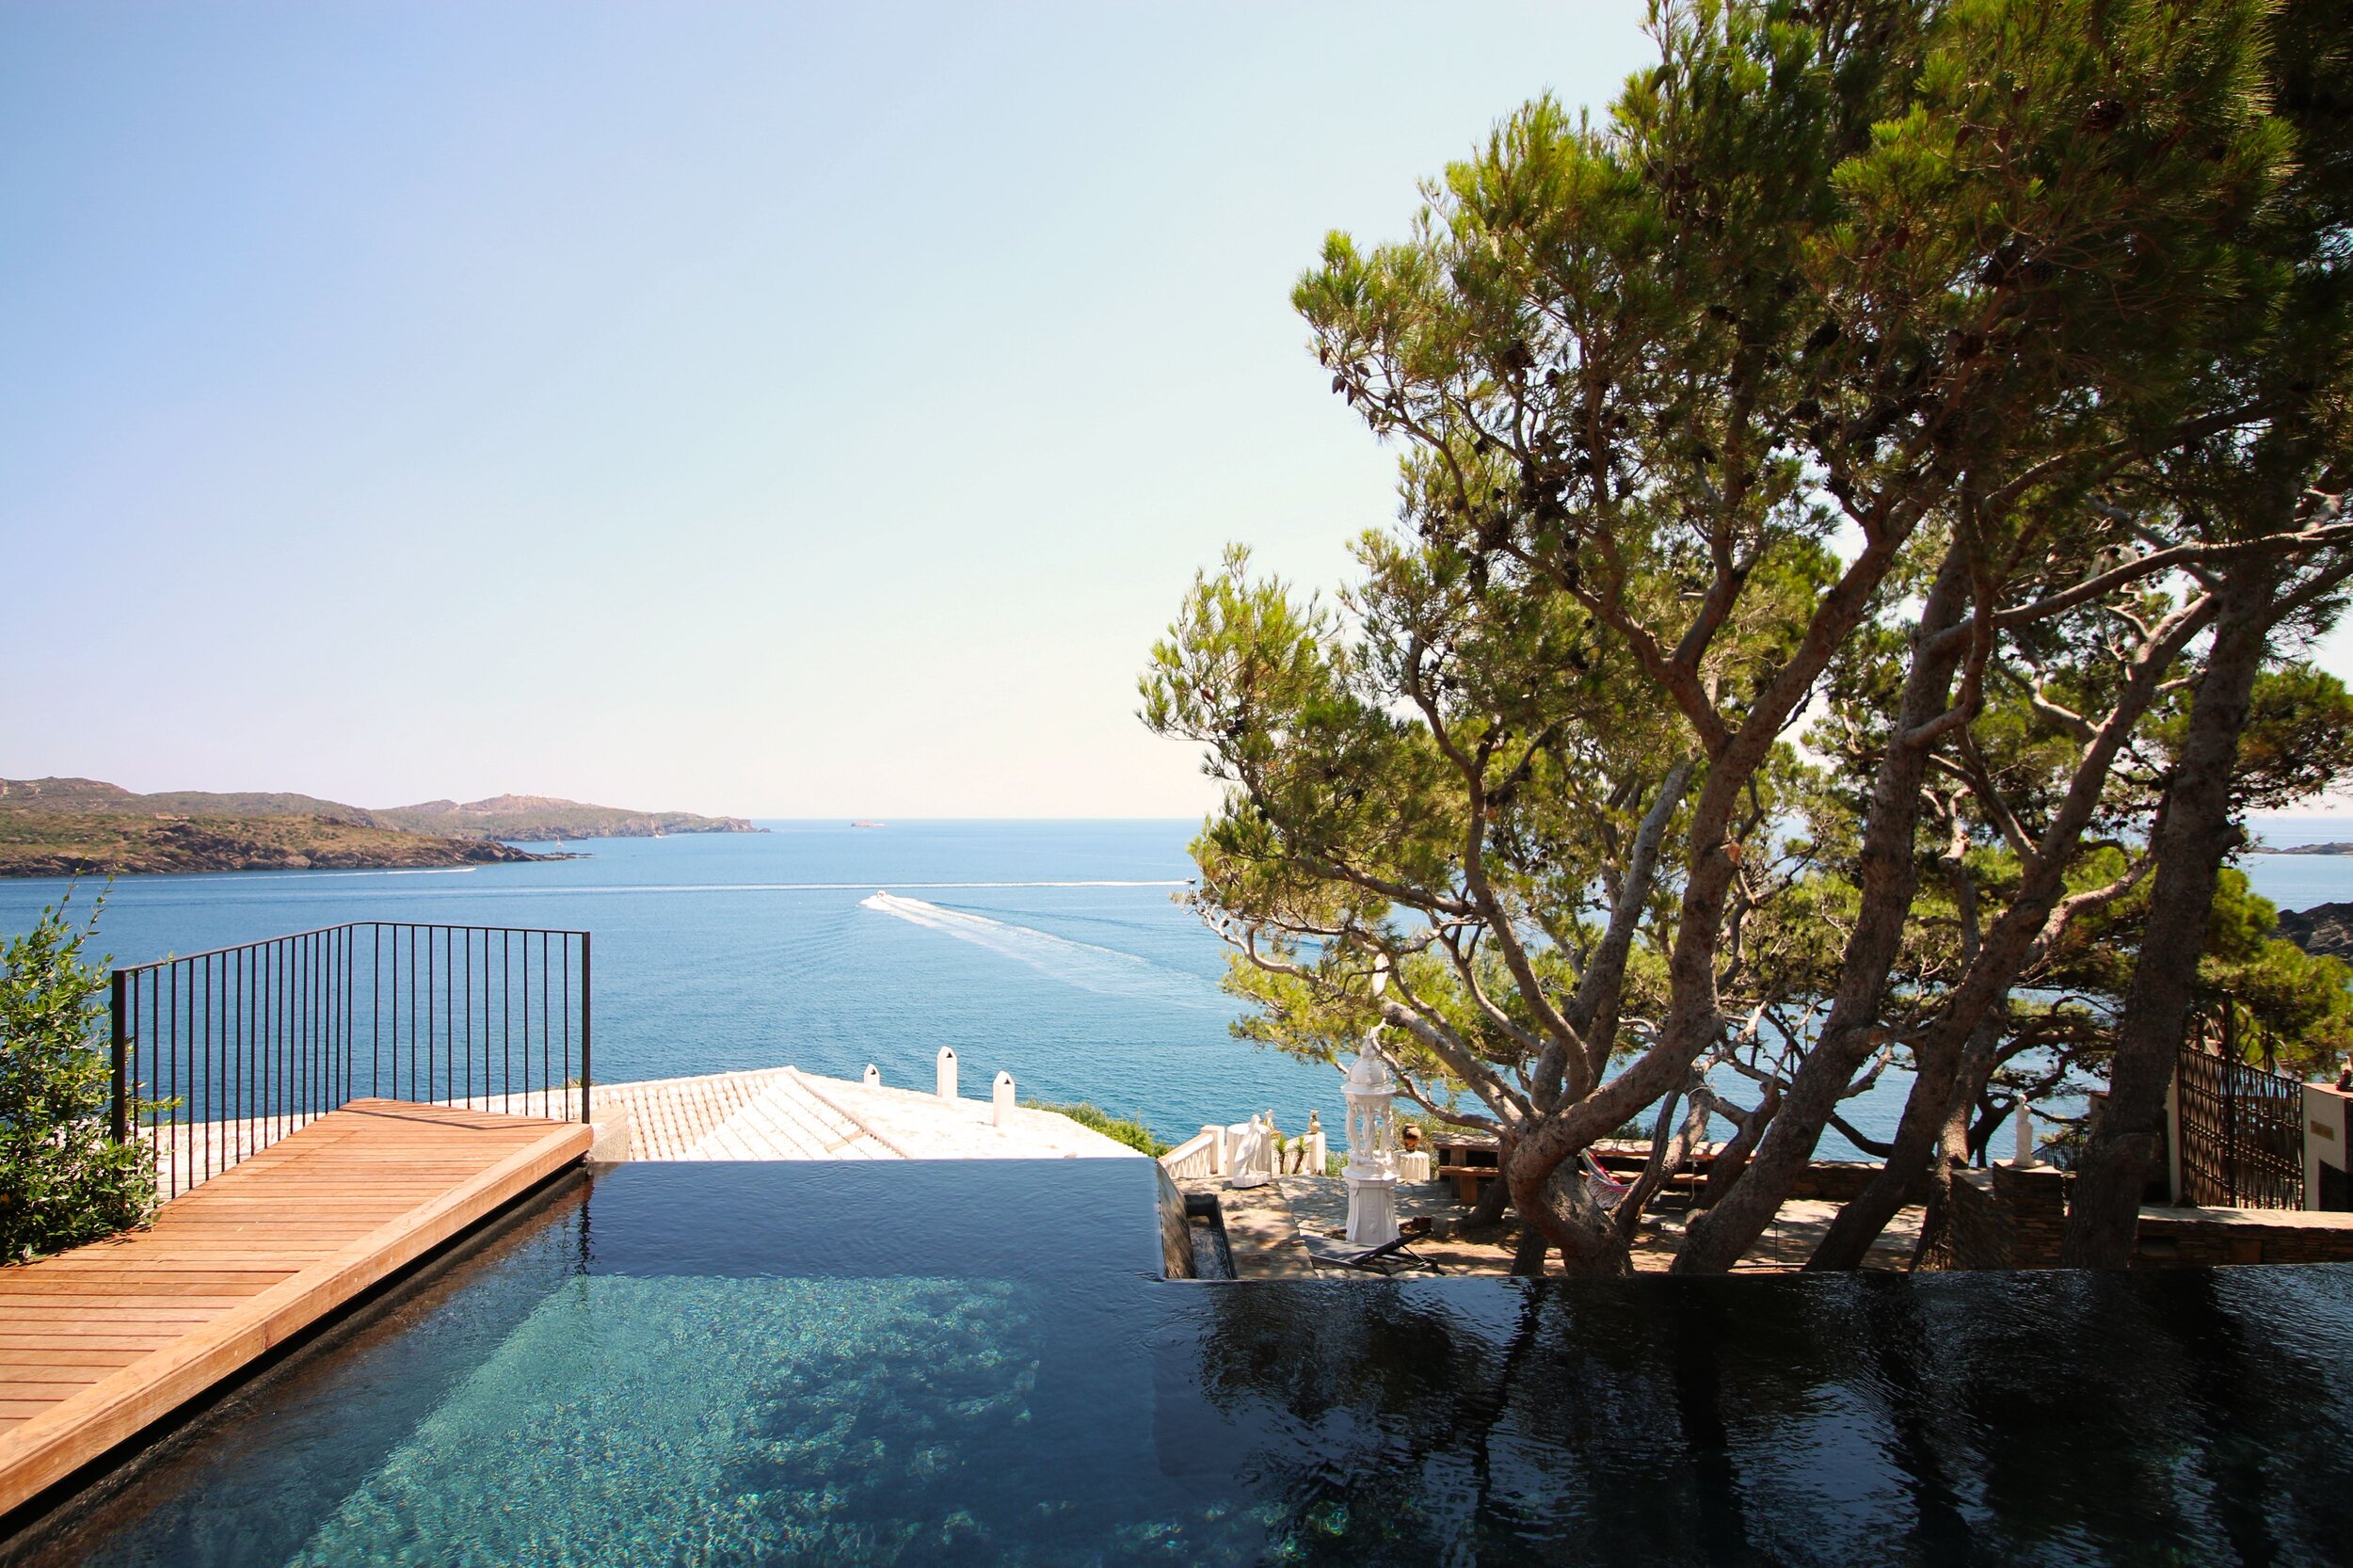 Luxury estate in Cadaqués, Spain, with swimming pool overlooking the Mediterranean Sea